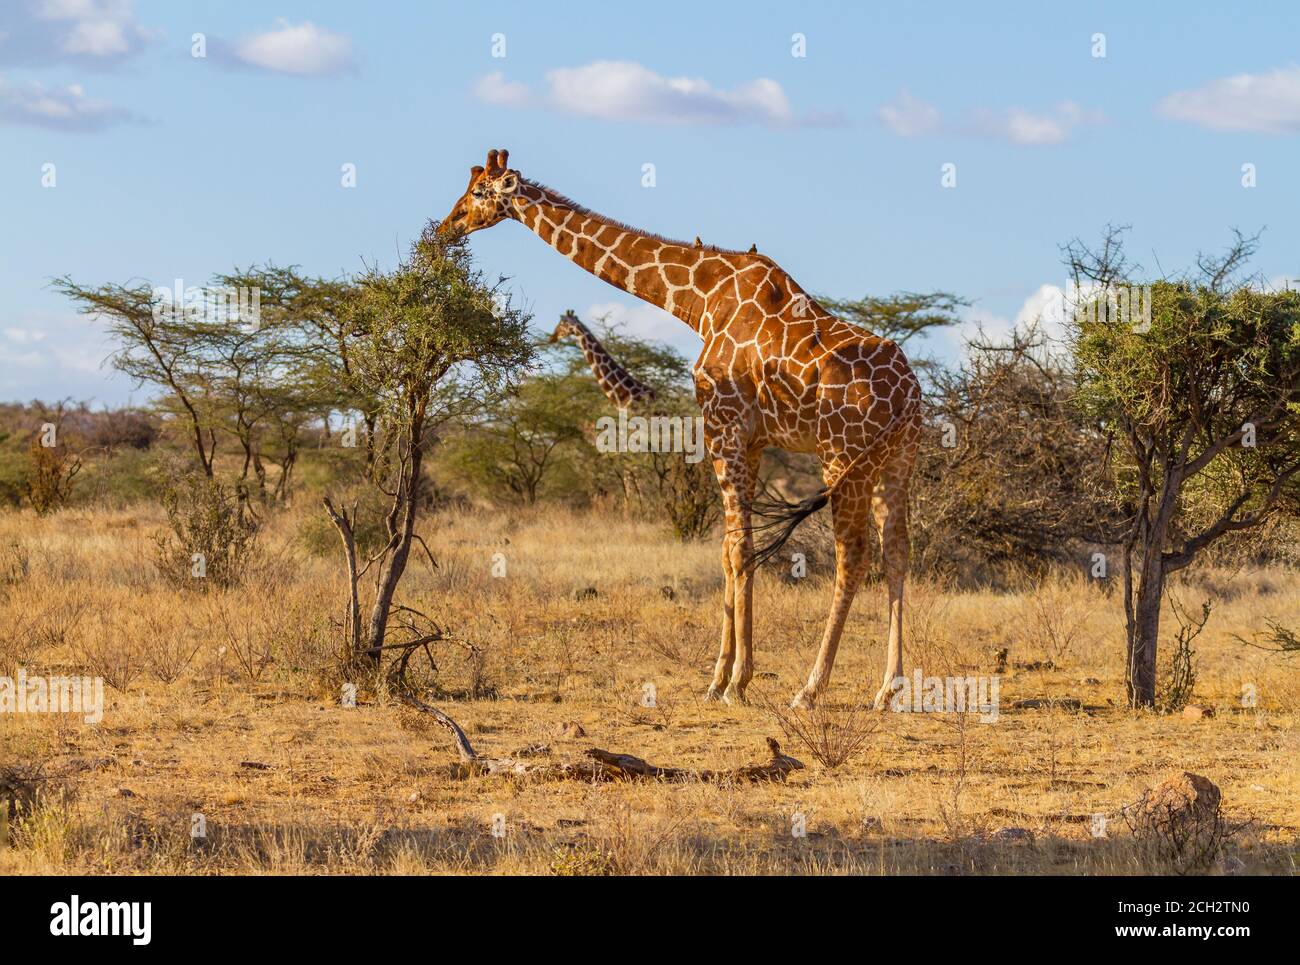 Netzgiraffe (Giraffa camelopardalis reticulata), bedrohte Wildtiere, ernährt sich am Dornbusch im Samburu National Reserve, Kenia Stockfoto